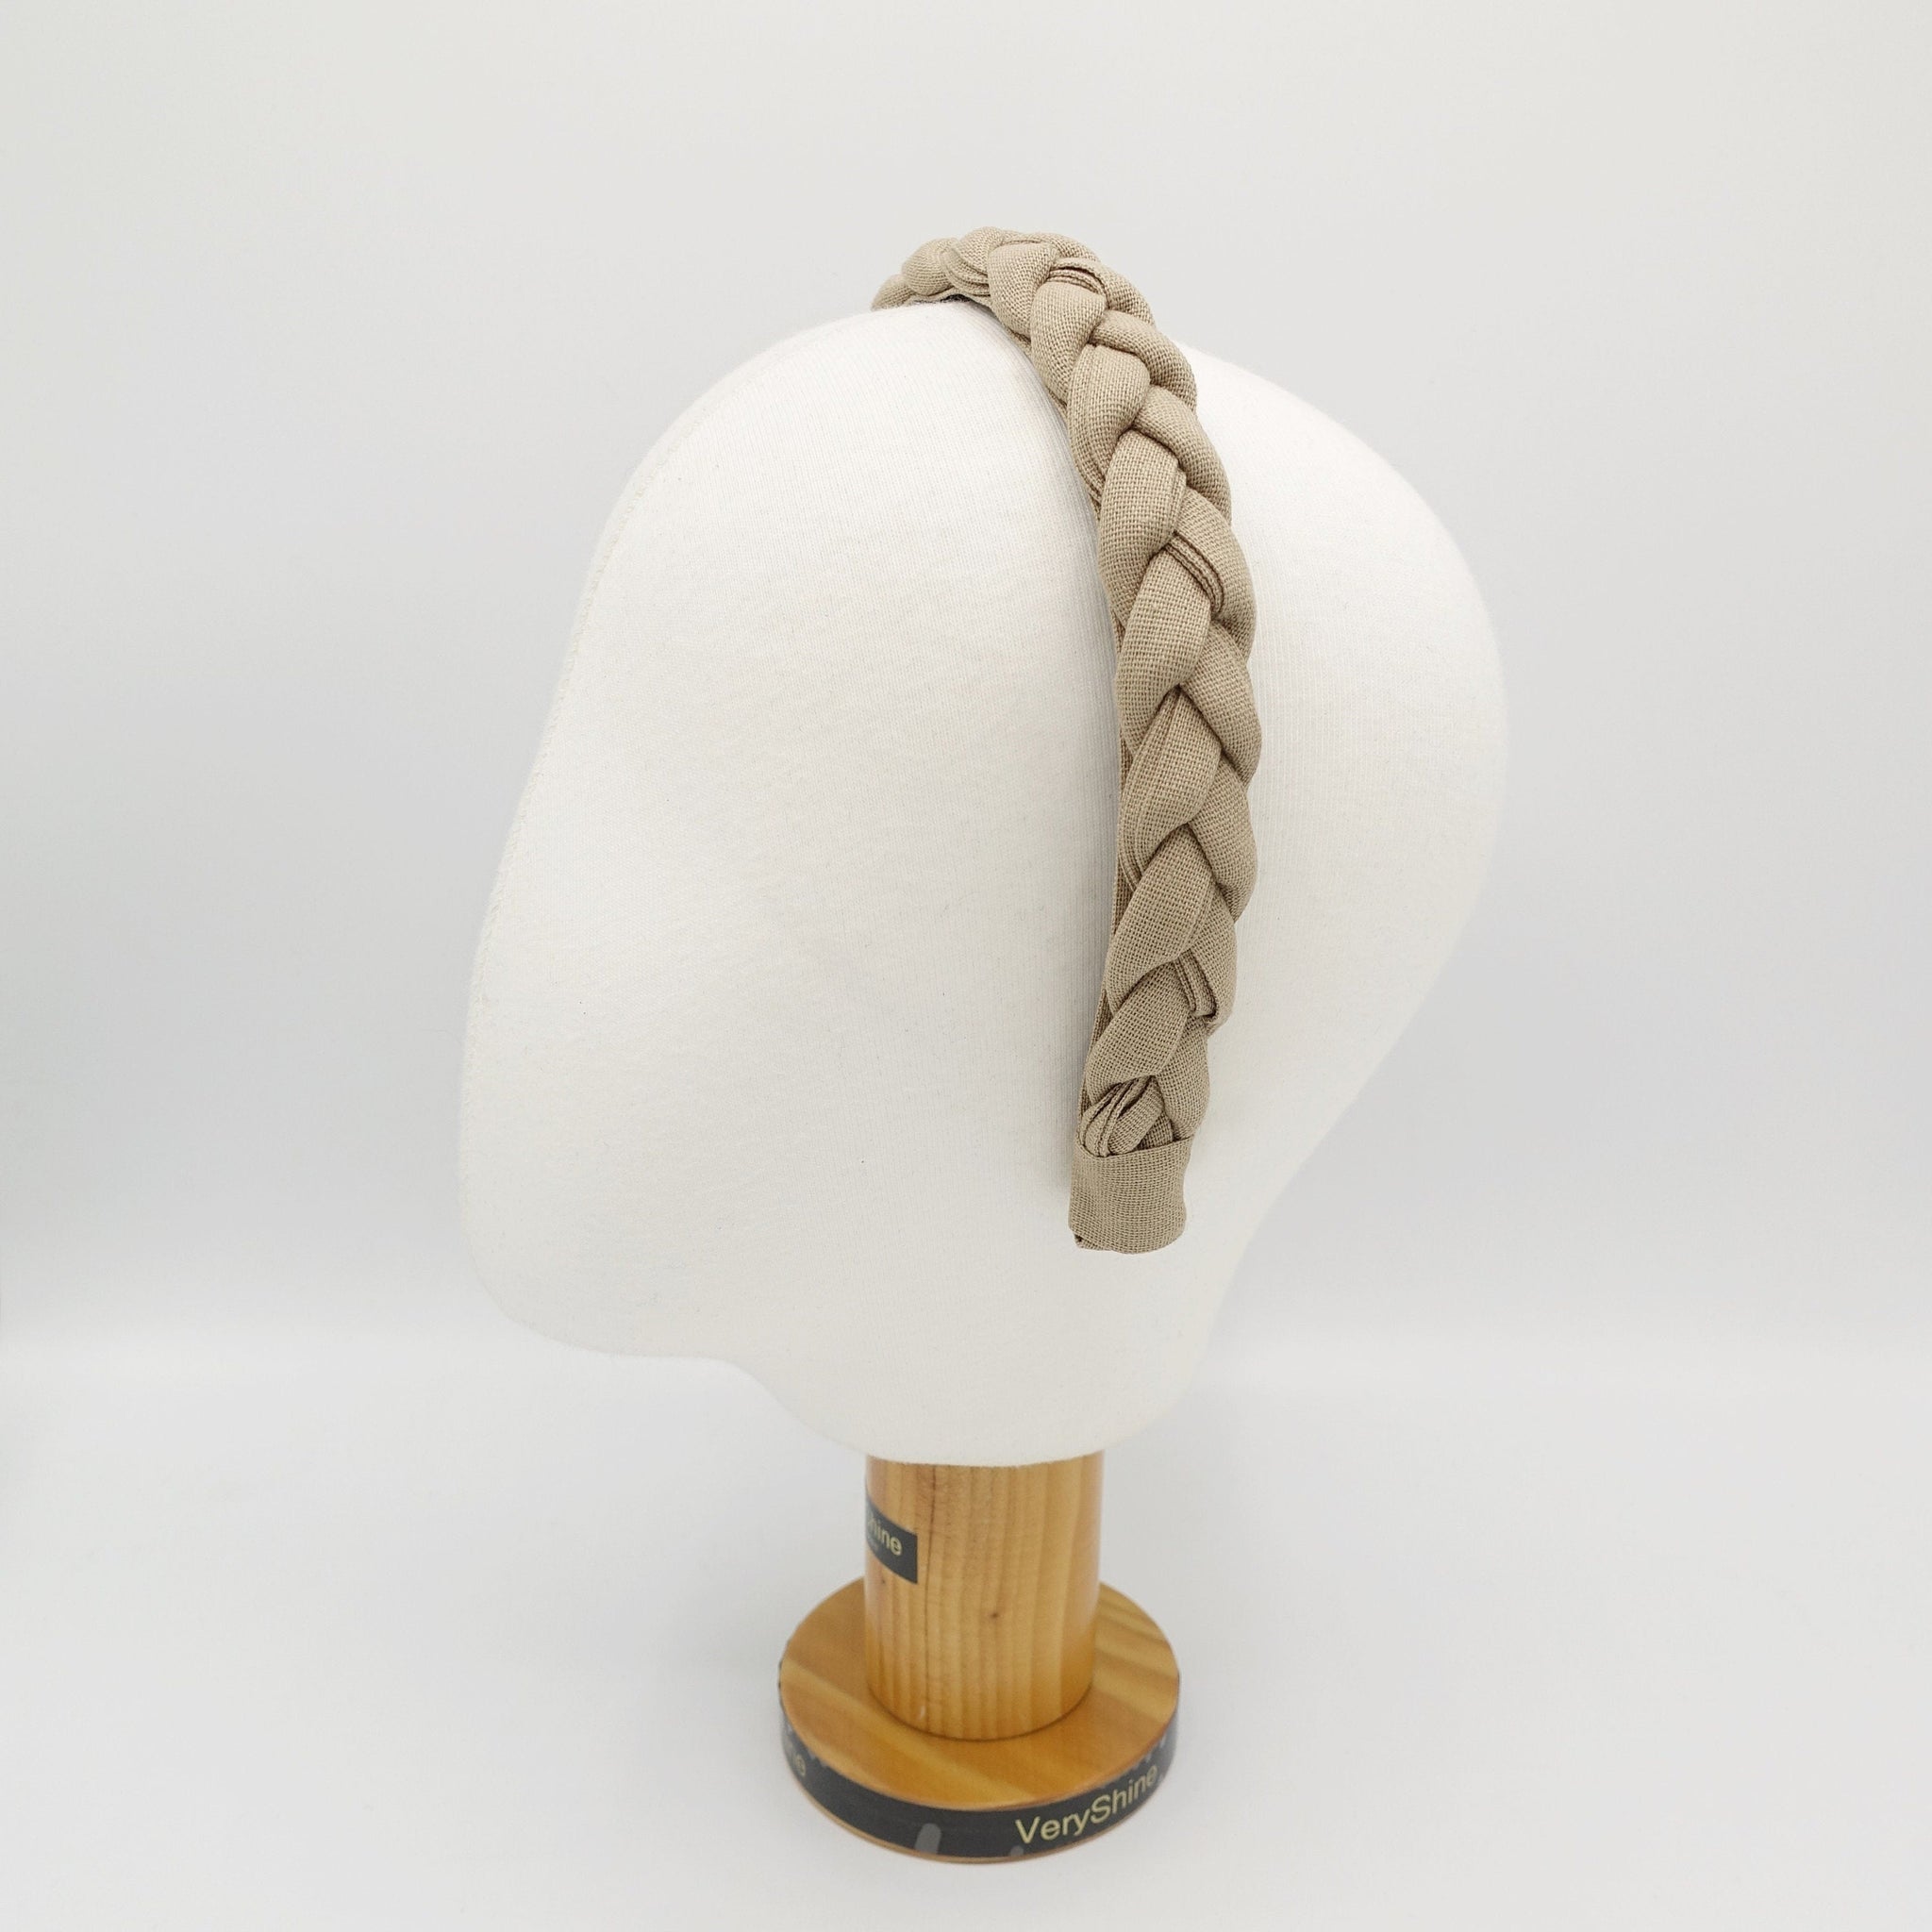 veryshine.com Headband narrow braided headband linen braided hairband simple hair accessory for women